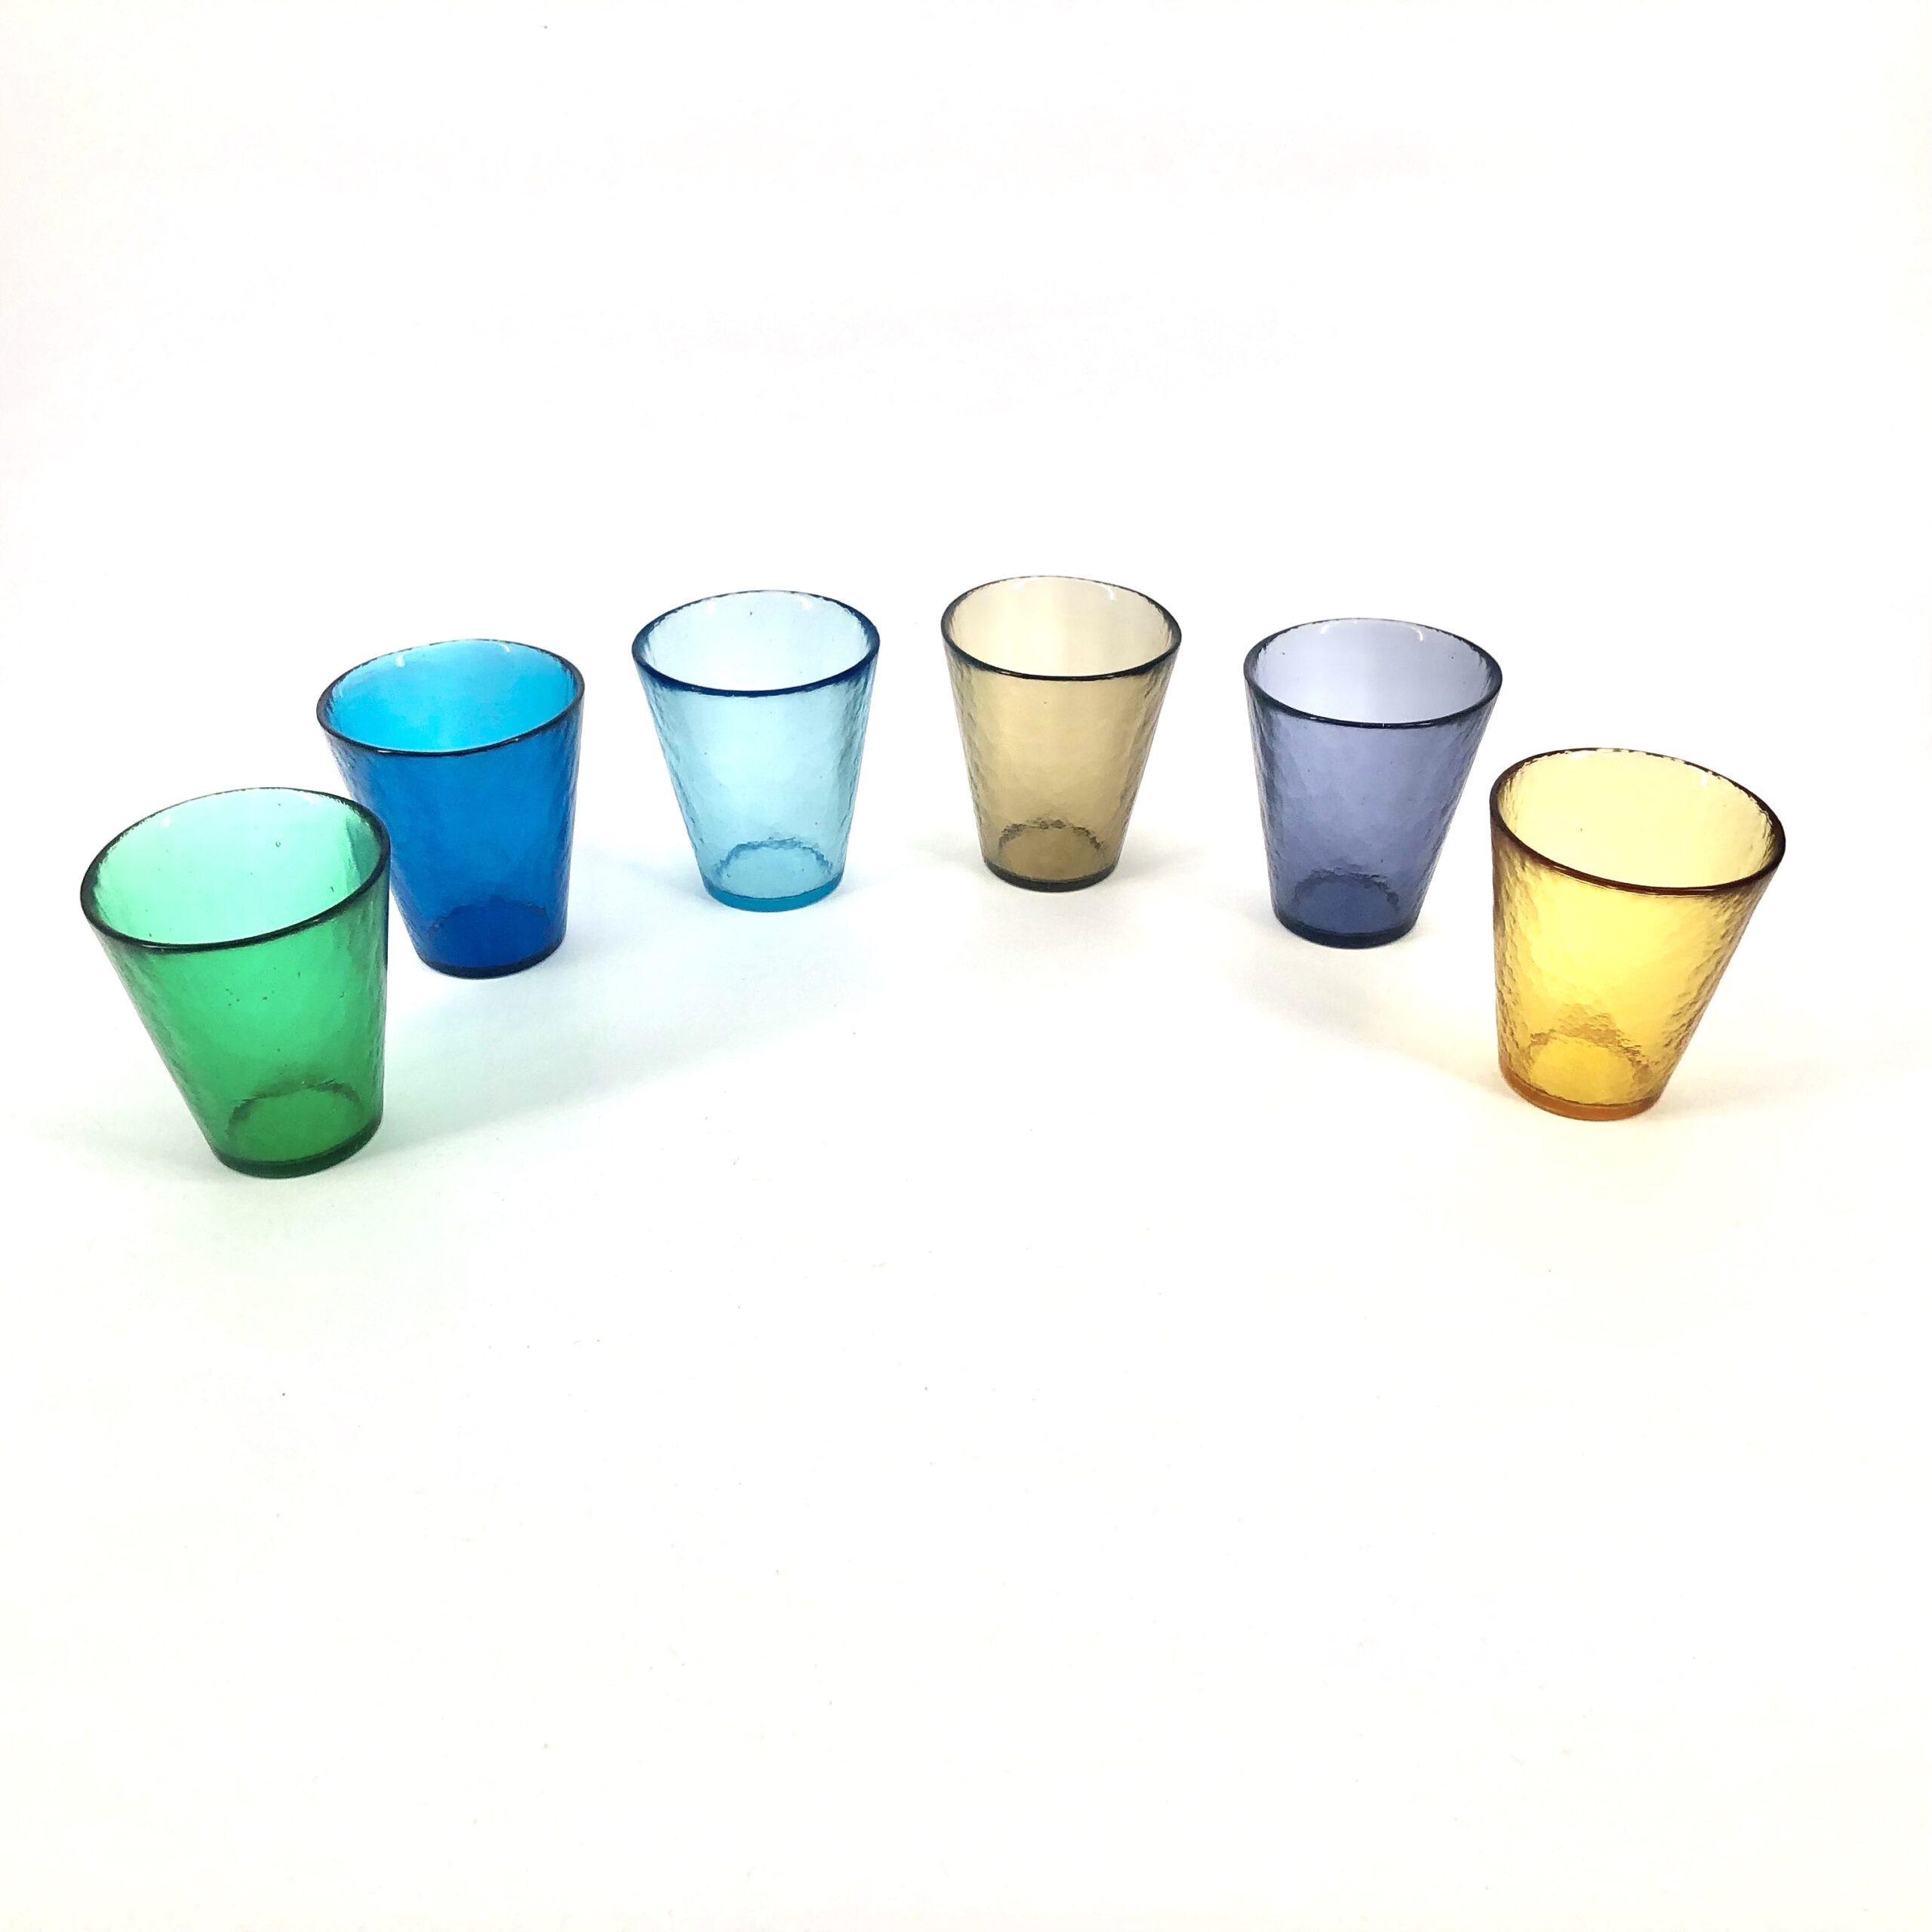 Buy Online Happy Drink various colors, Murano Water Glasses, set 6 pcs.